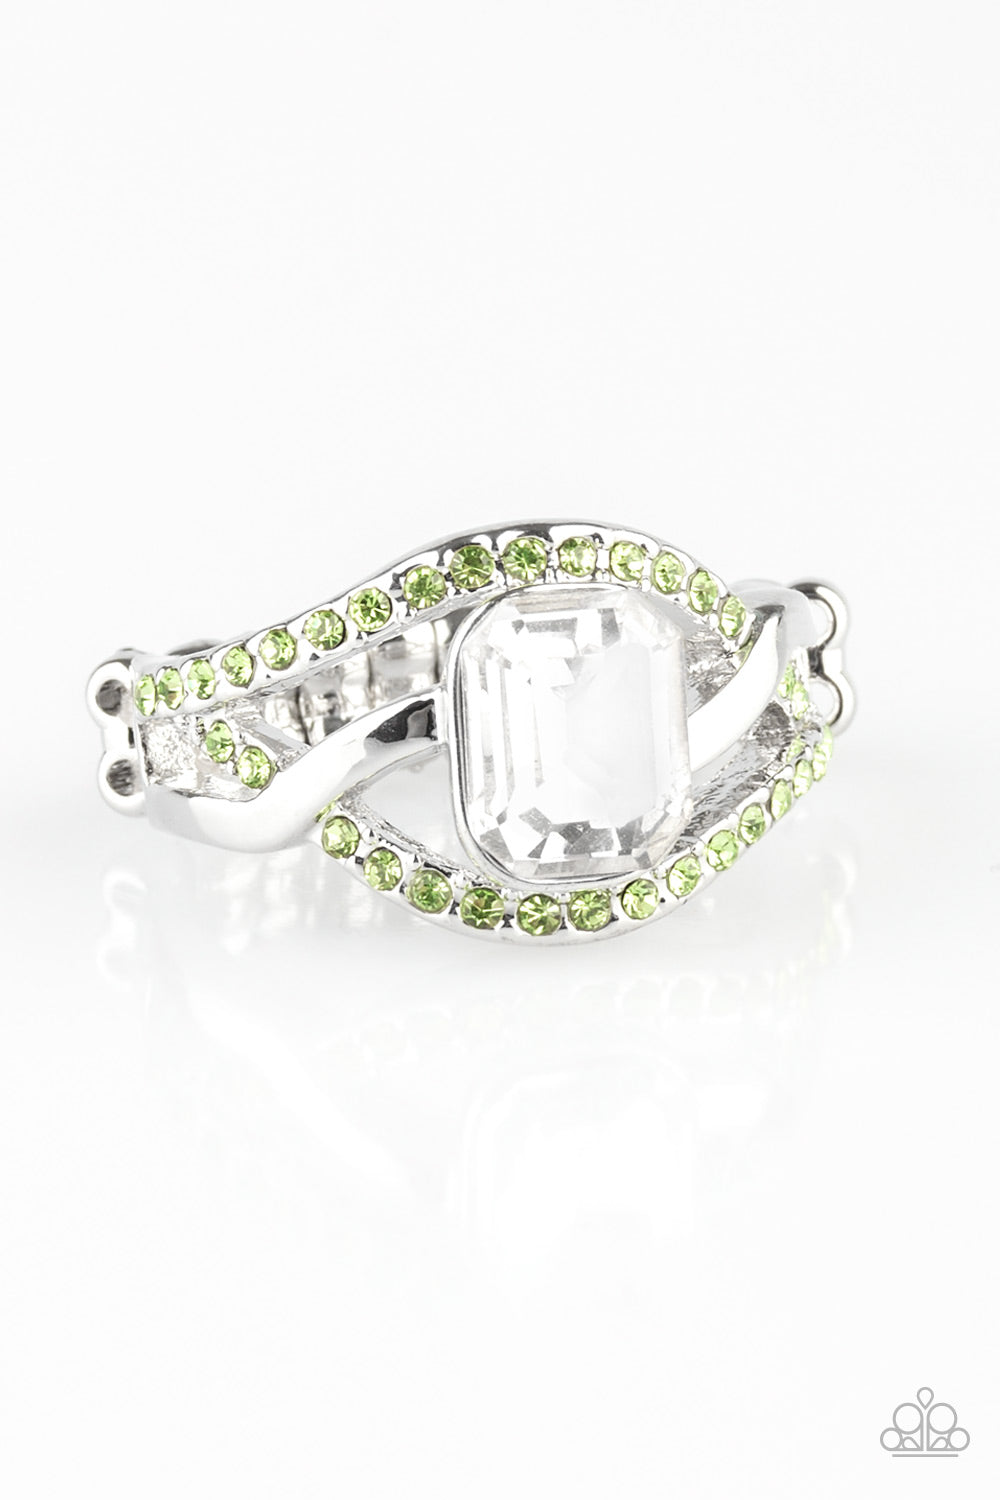 Paparazzi BLING It On! - Green Rhinestone - Ring - $5 Jewelry With Ashley Swint